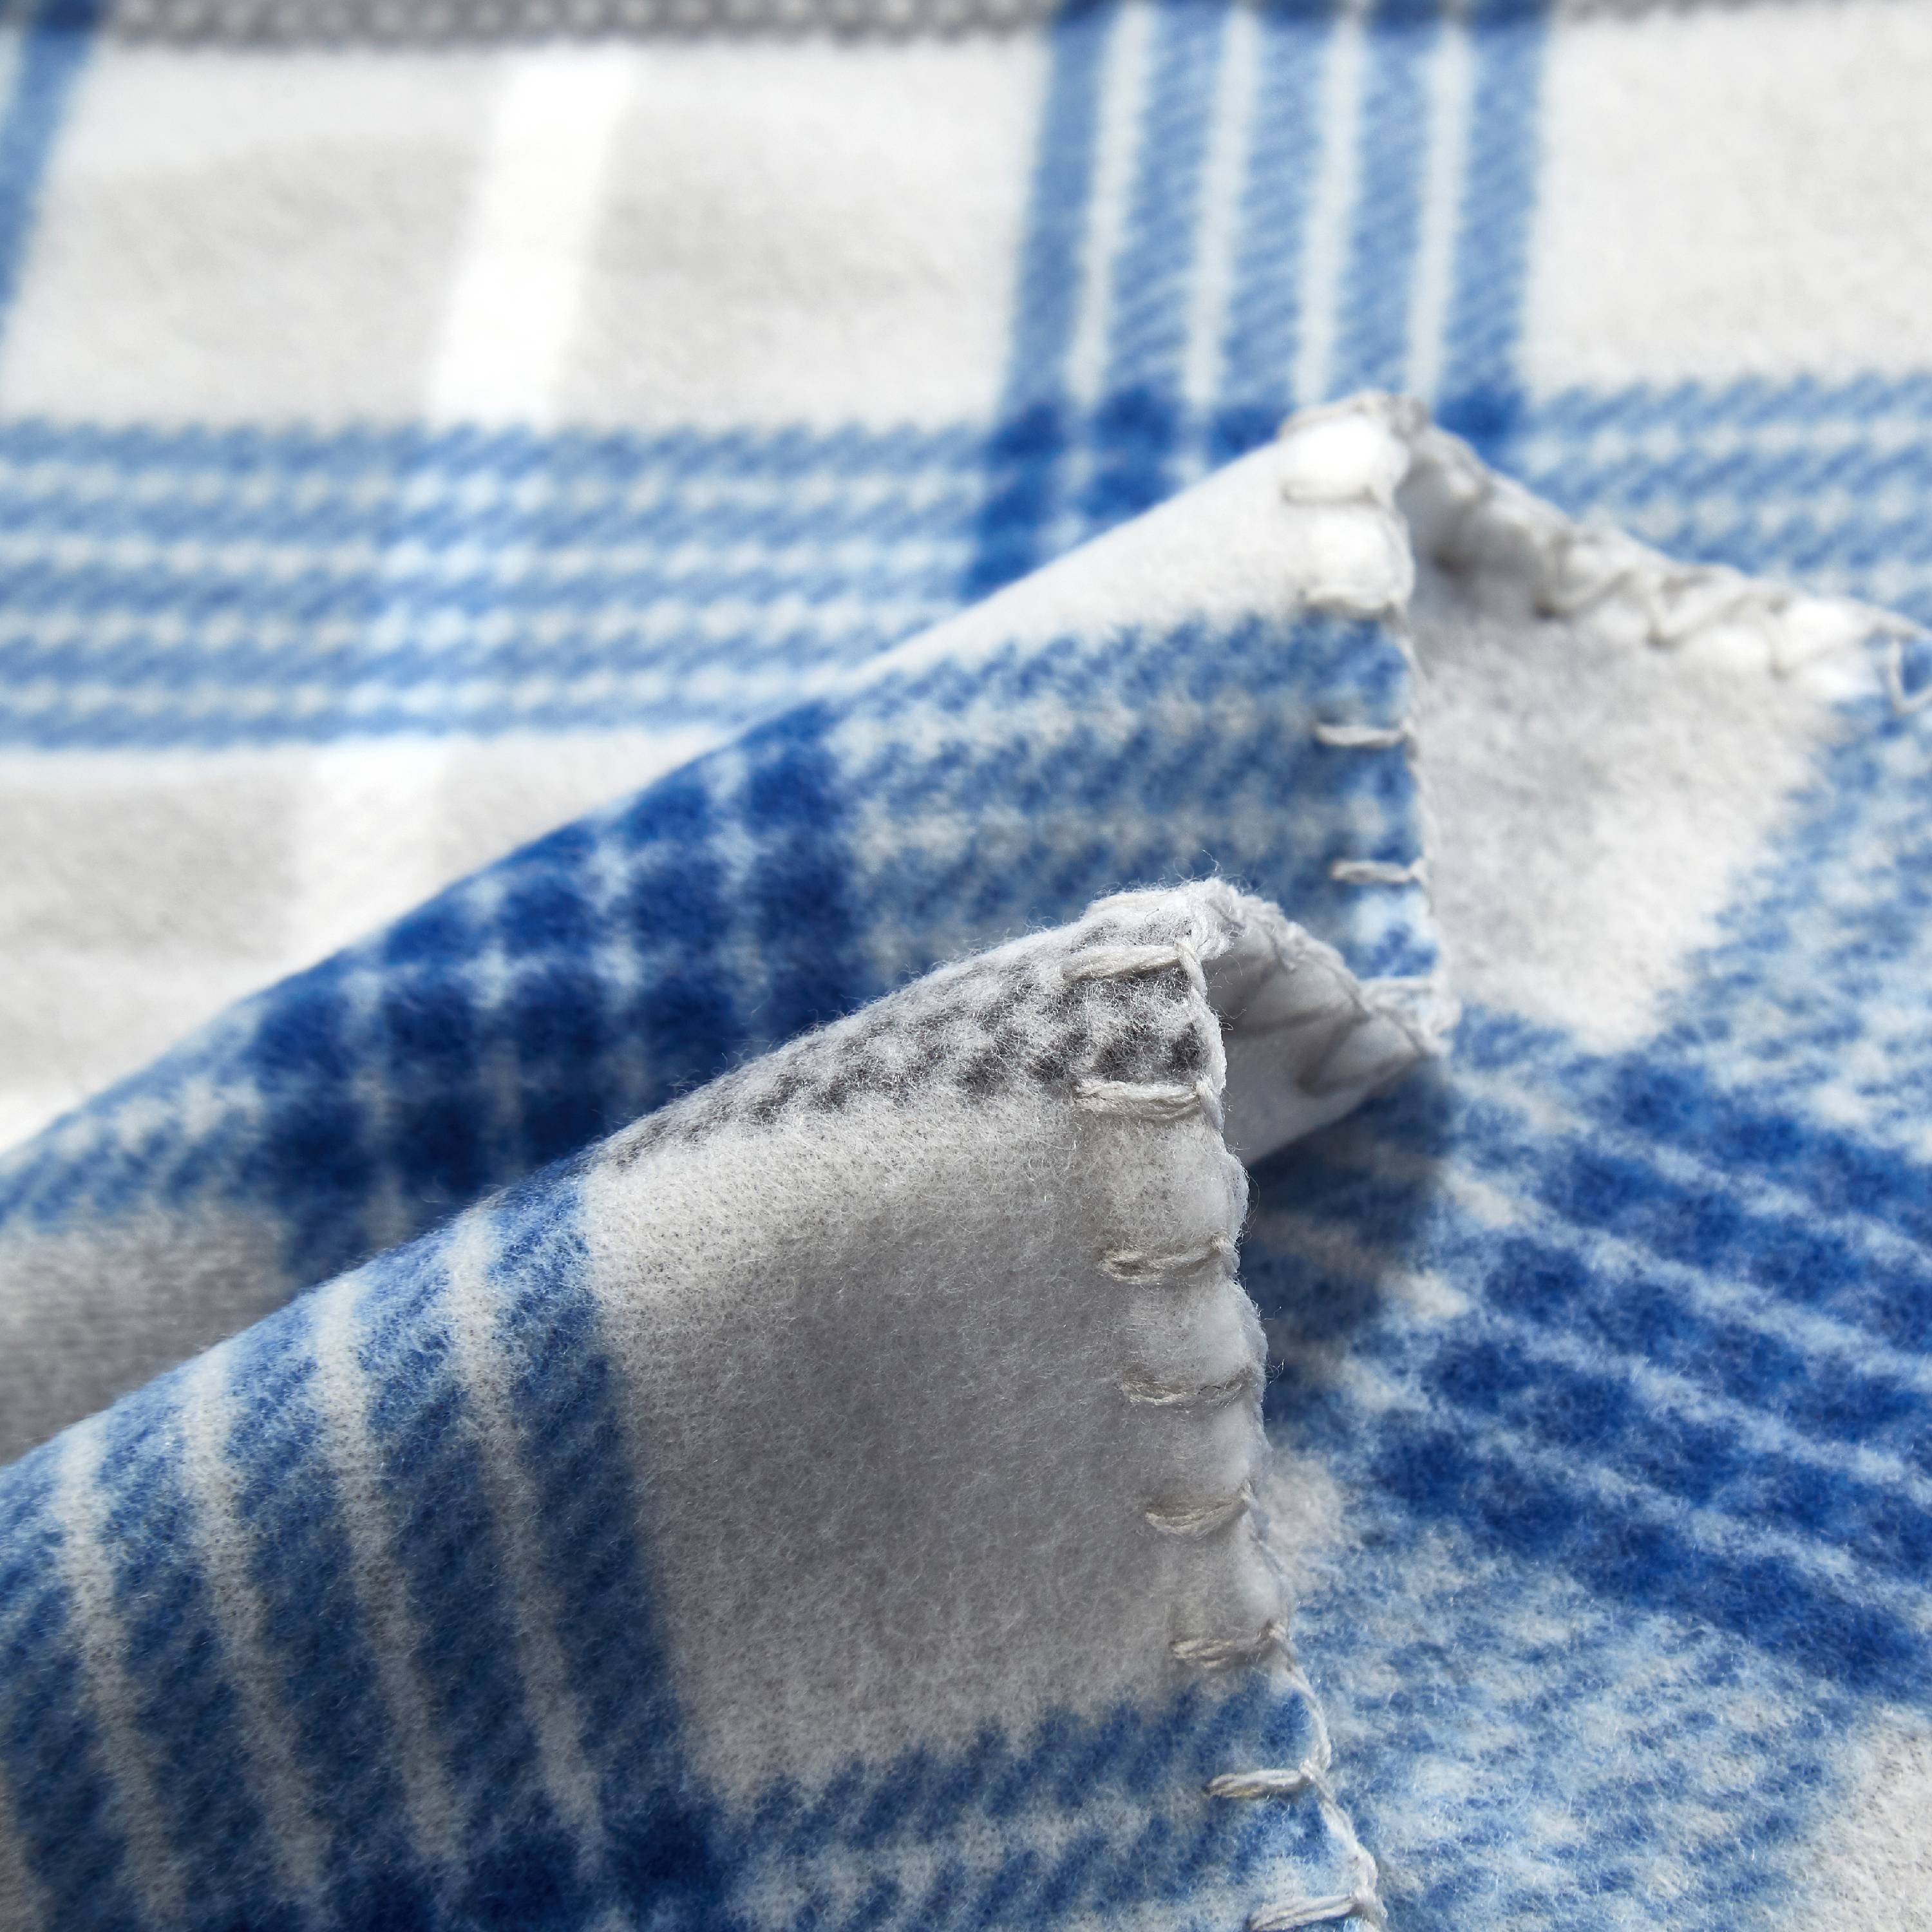 Mainstays Fleece Gray & Blue Plaid Throw Blanket, 50" x 60" - image 3 of 5